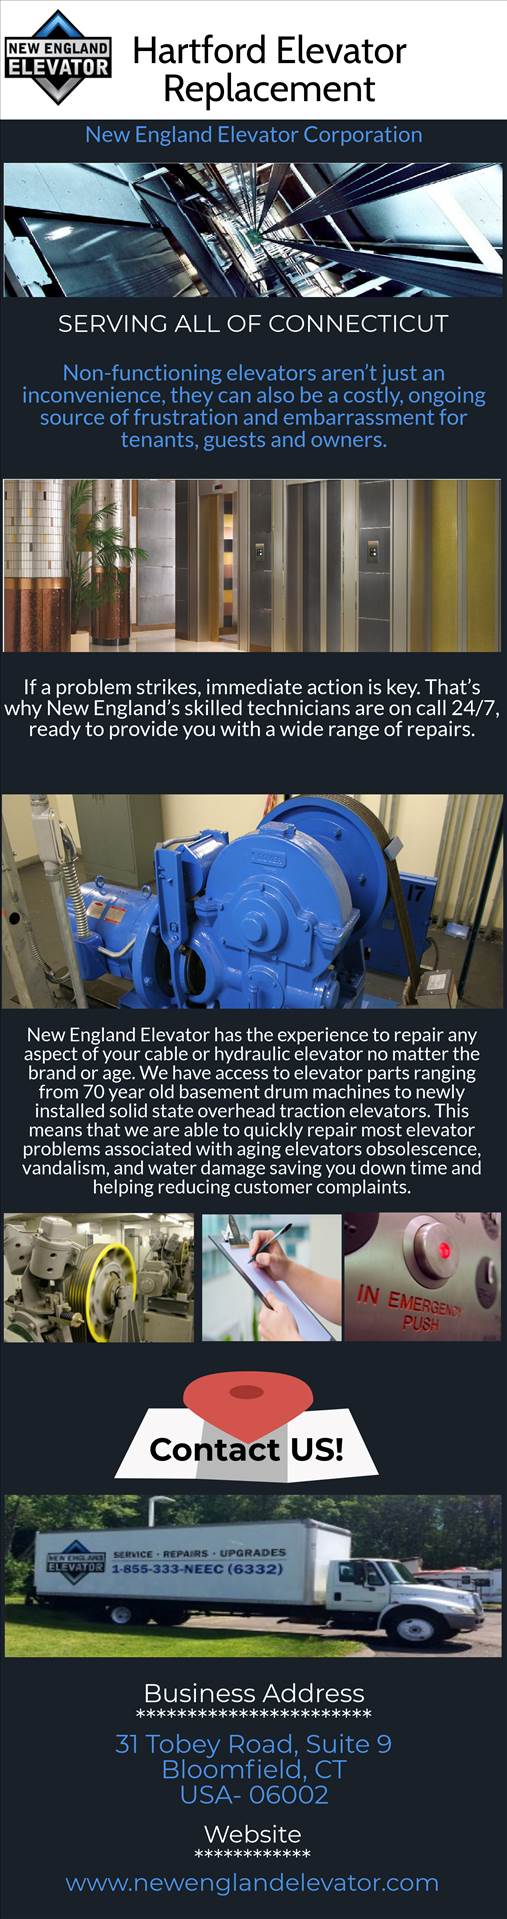 Hartford Elevator Replacement Elevator equipment repair and replacement service serving in Hartford, Connecticut.  Website: https://newenglandelevator.com by englandelevator